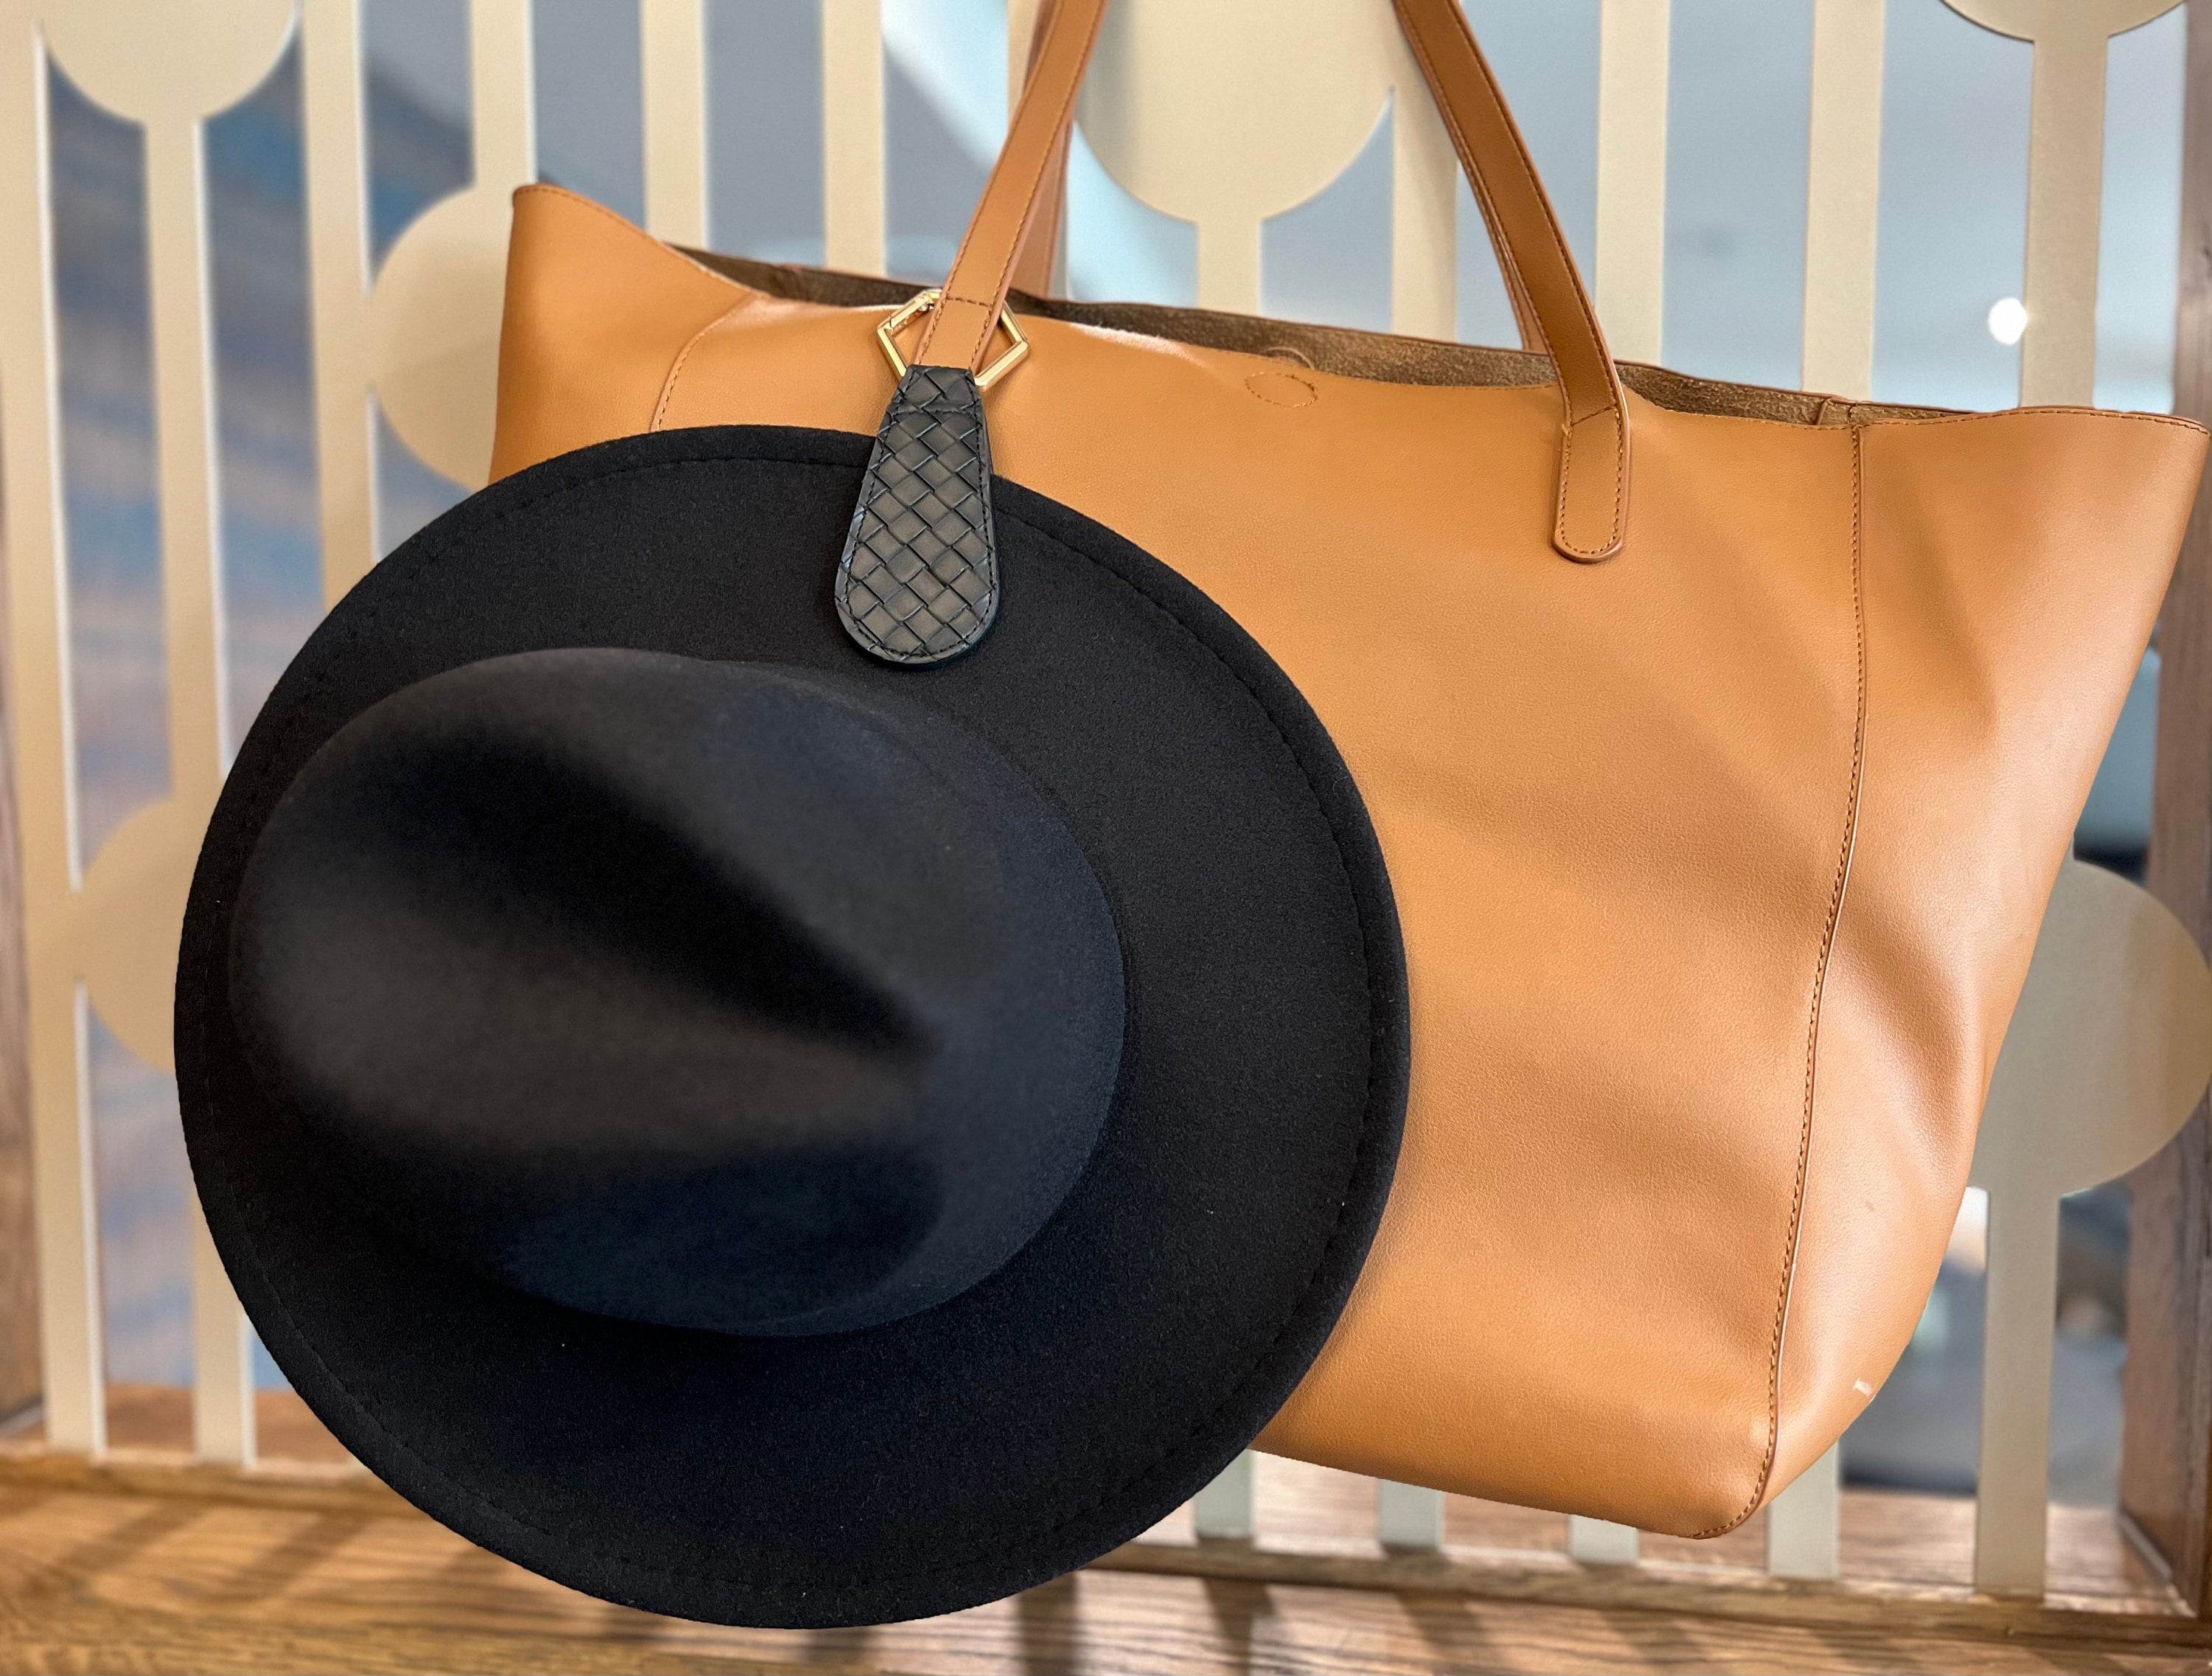 MOSLA Hat Box Travel Fedora Case Universal Size Hat Carrier,Sleek Hat –  Comocase